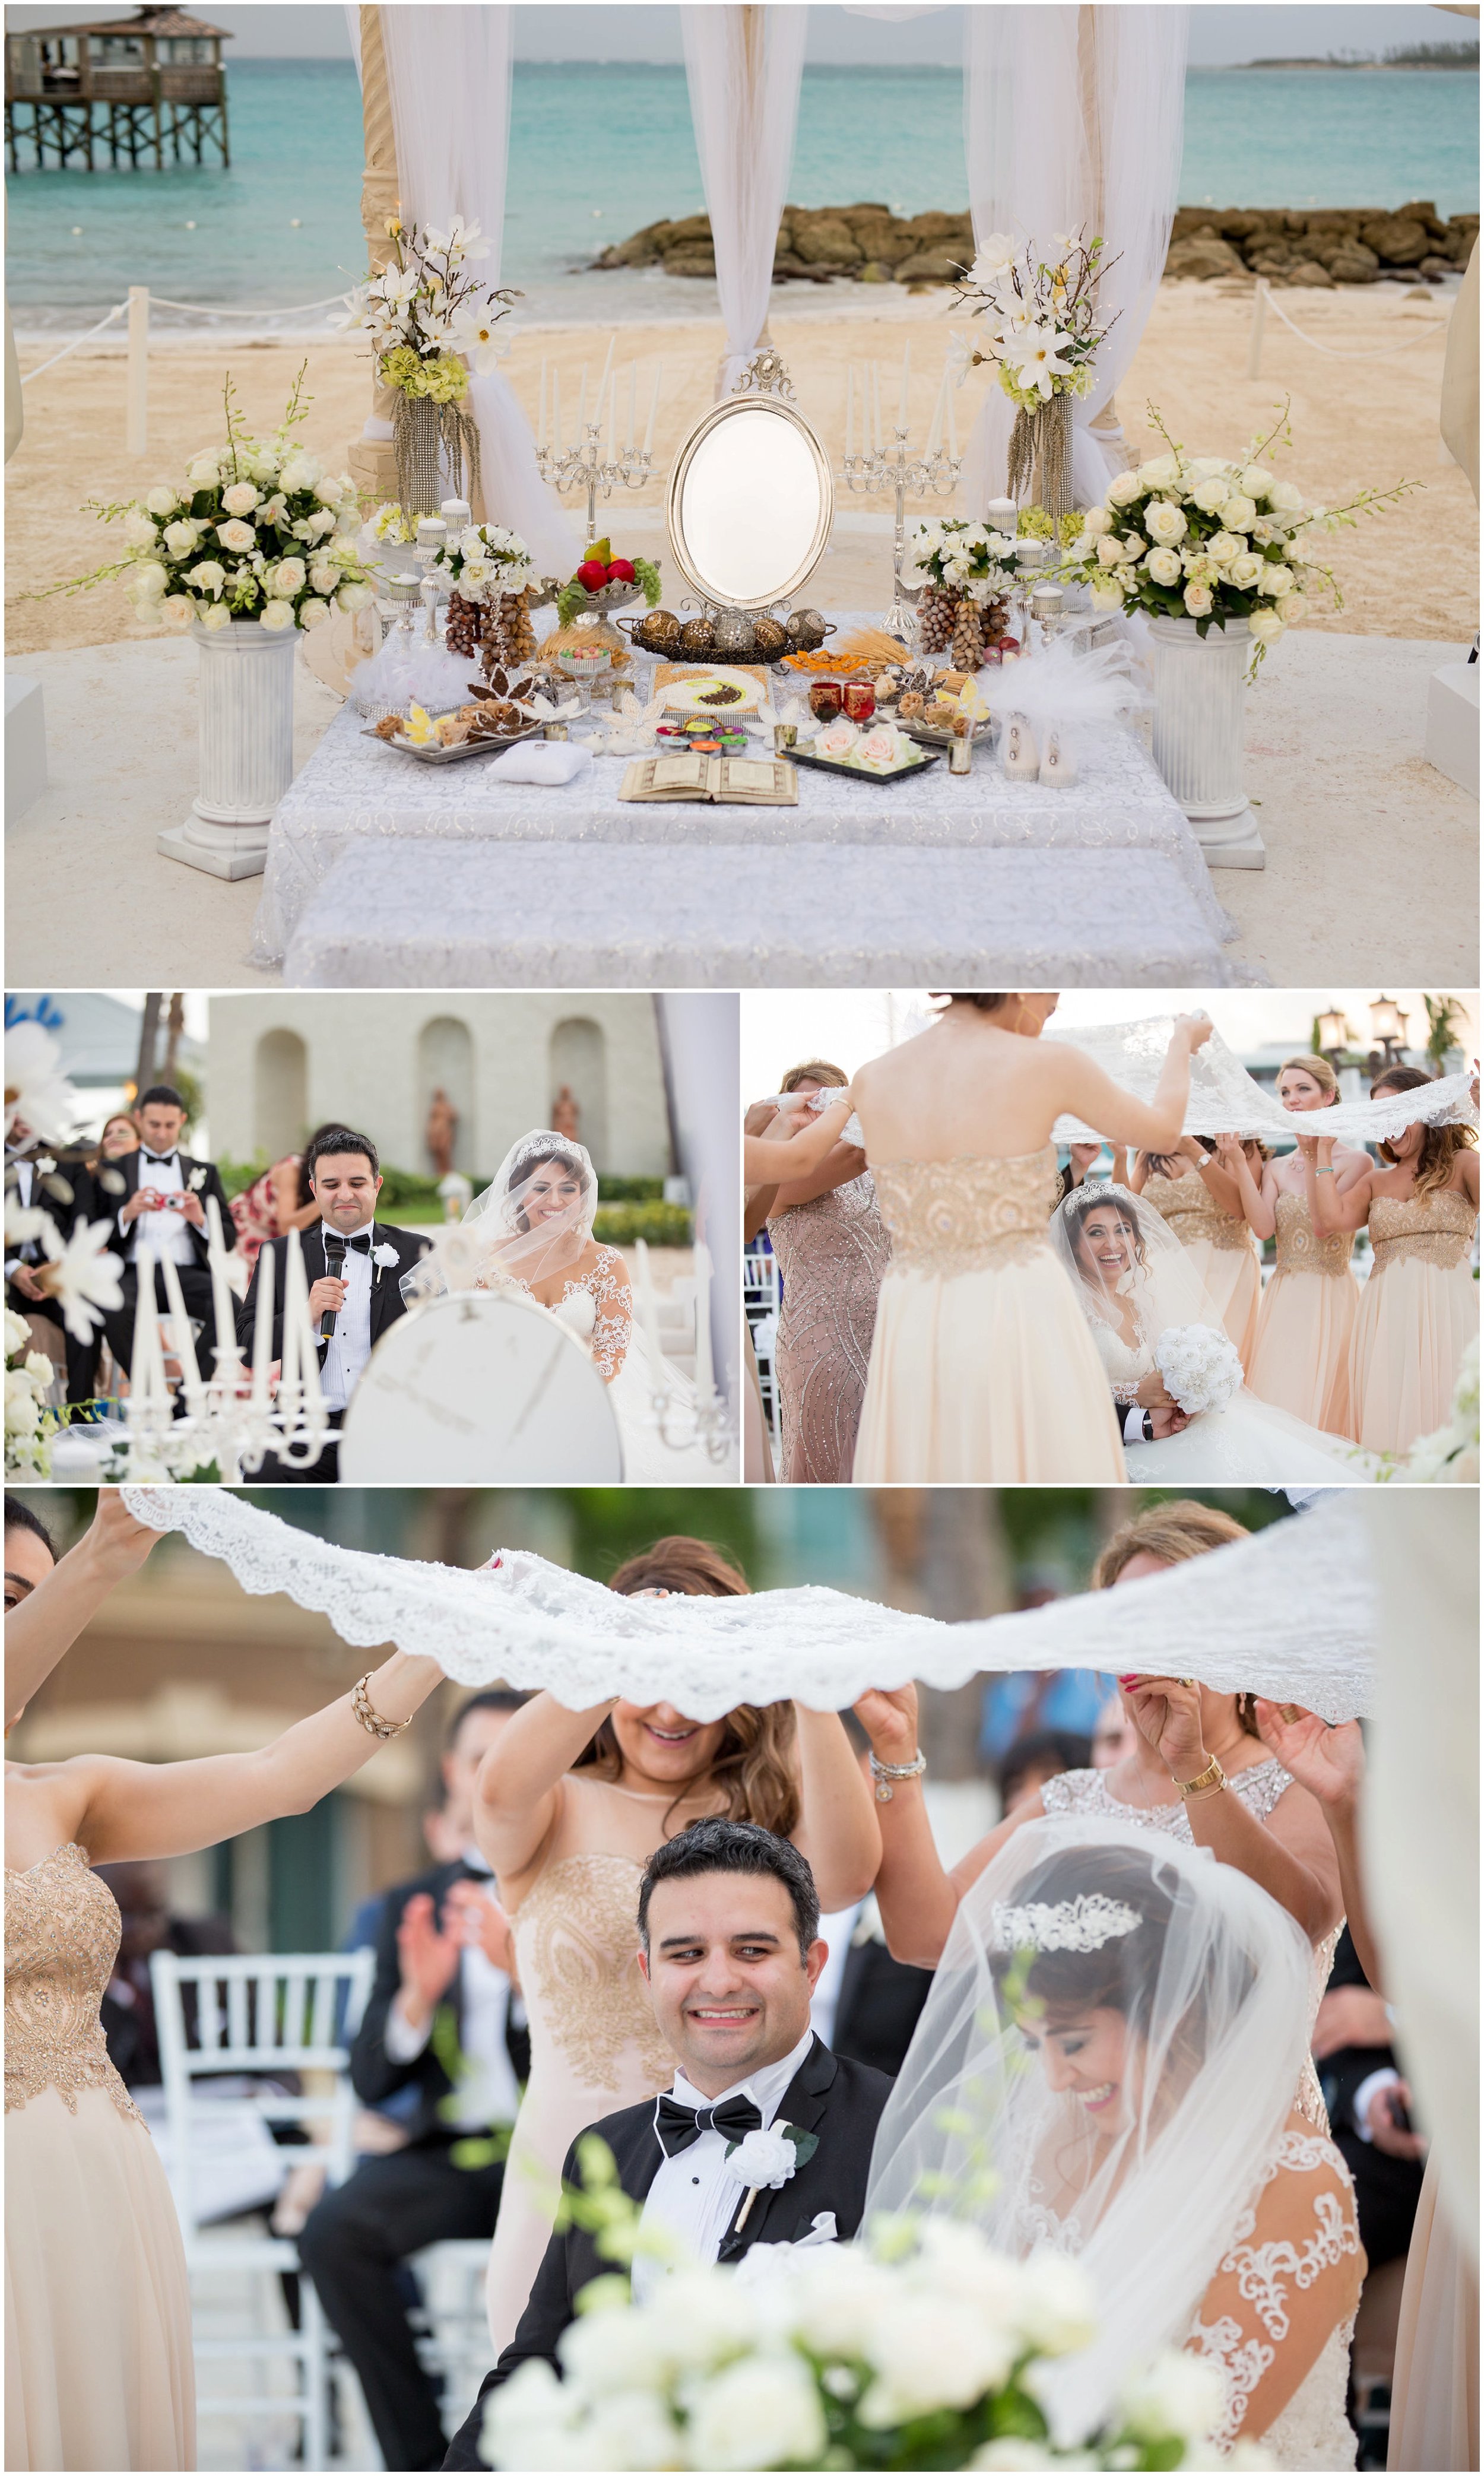 Le Cape Weddings- Destination Wedding Photography -ShayanandNikkie-352-X3_LuxuryDestinationPhotographer.jpg